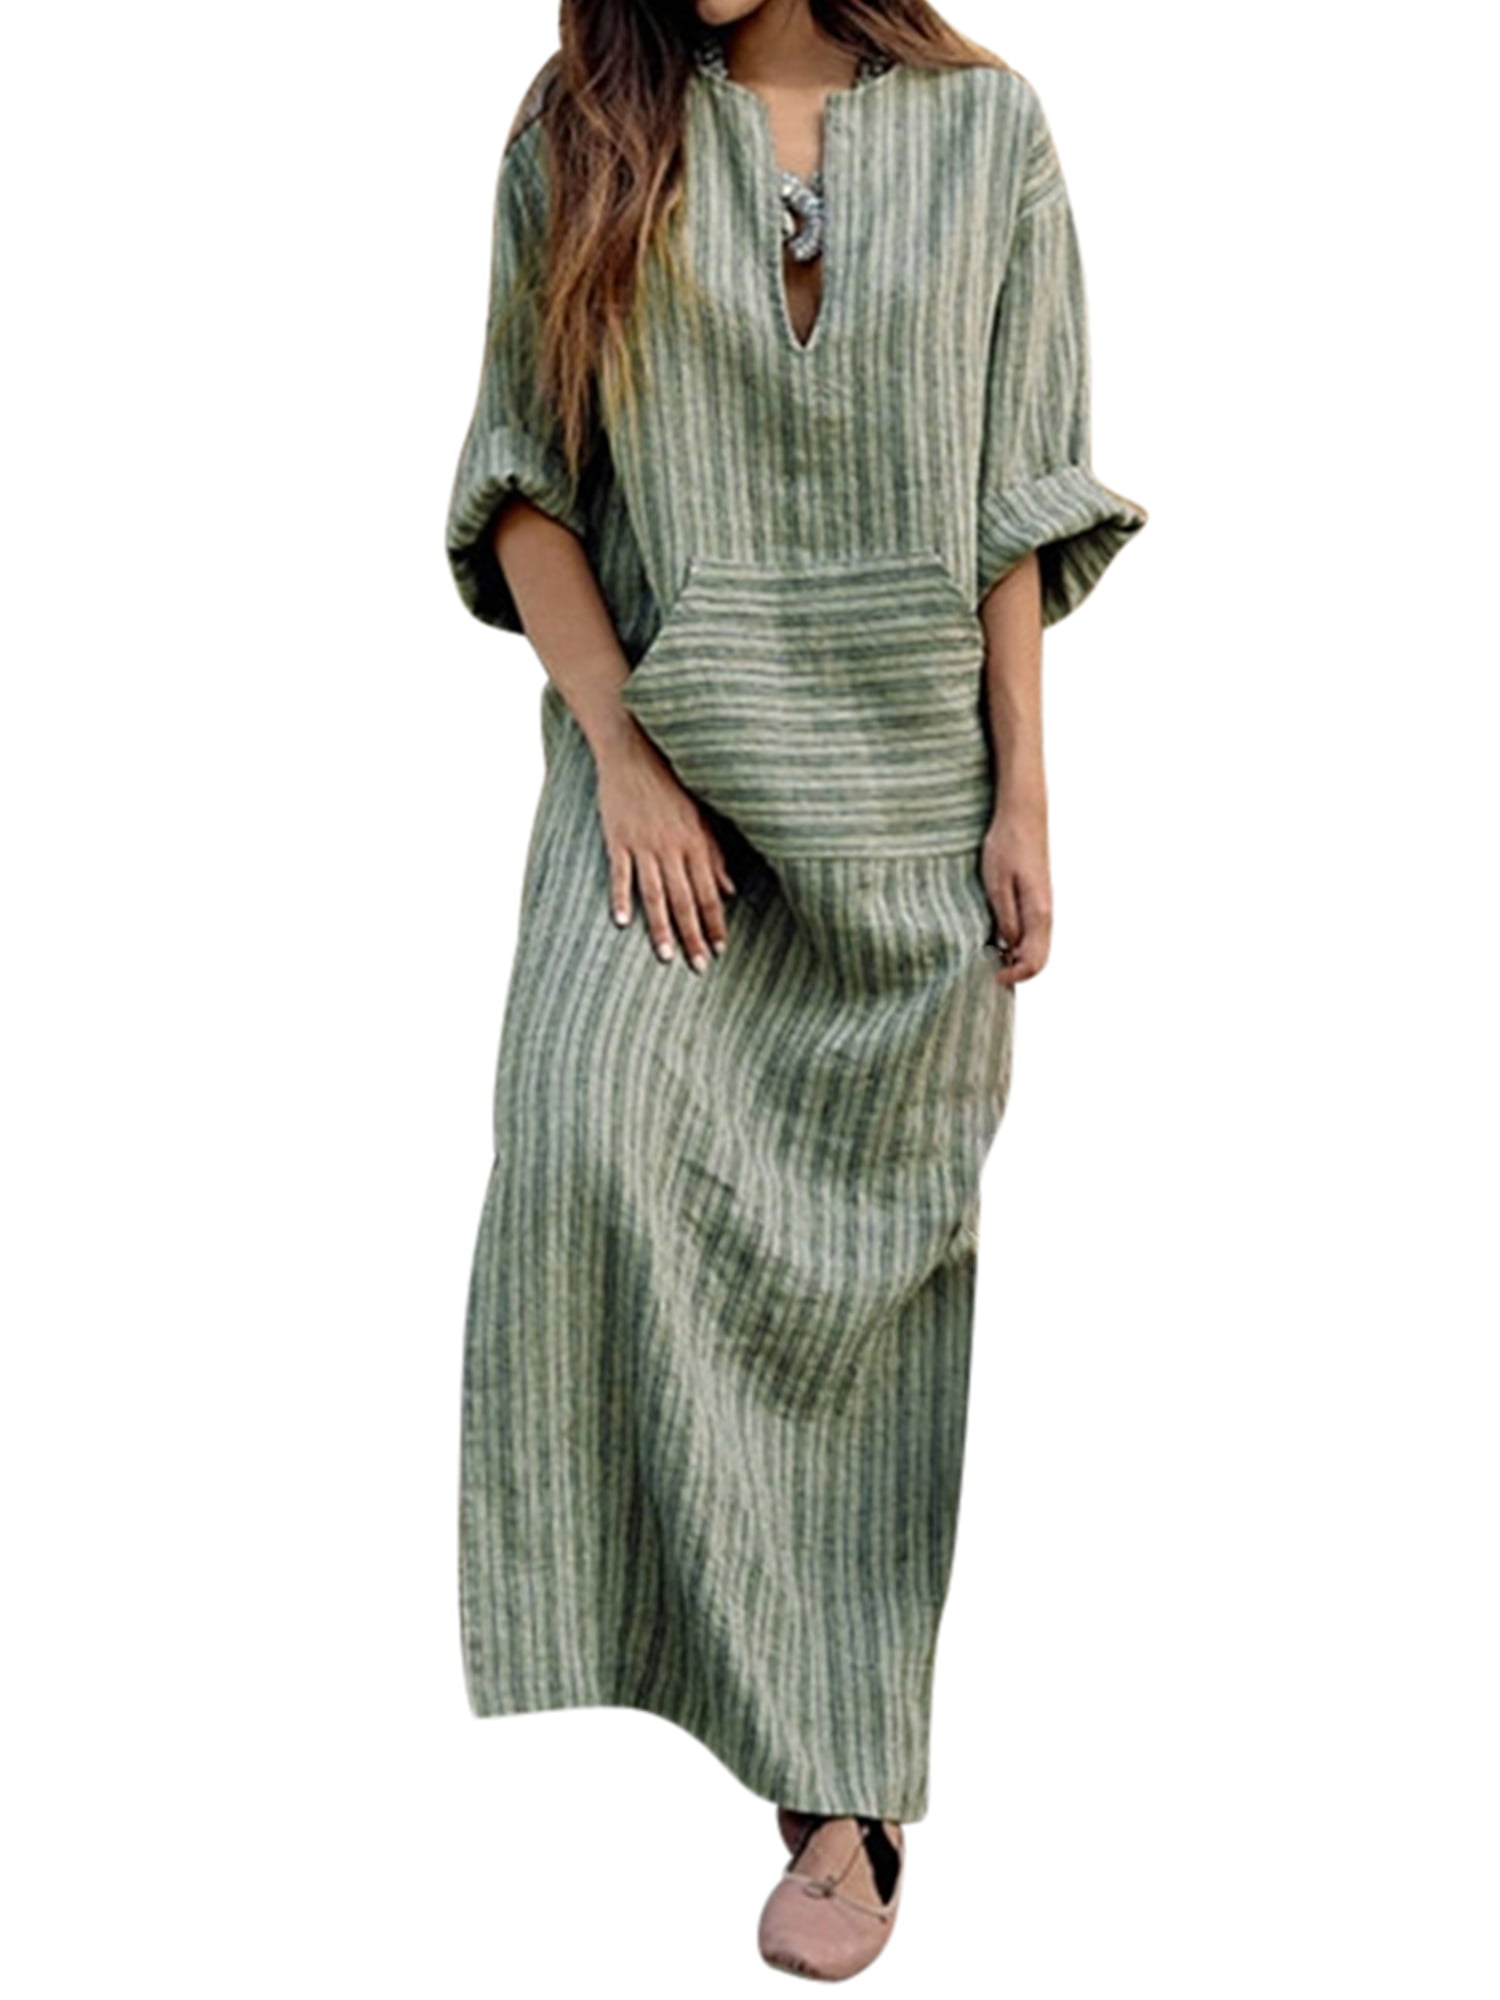 Casual Knit Dress Female Long Sleeve Dress Button Women OL Ladies Maxi Dress